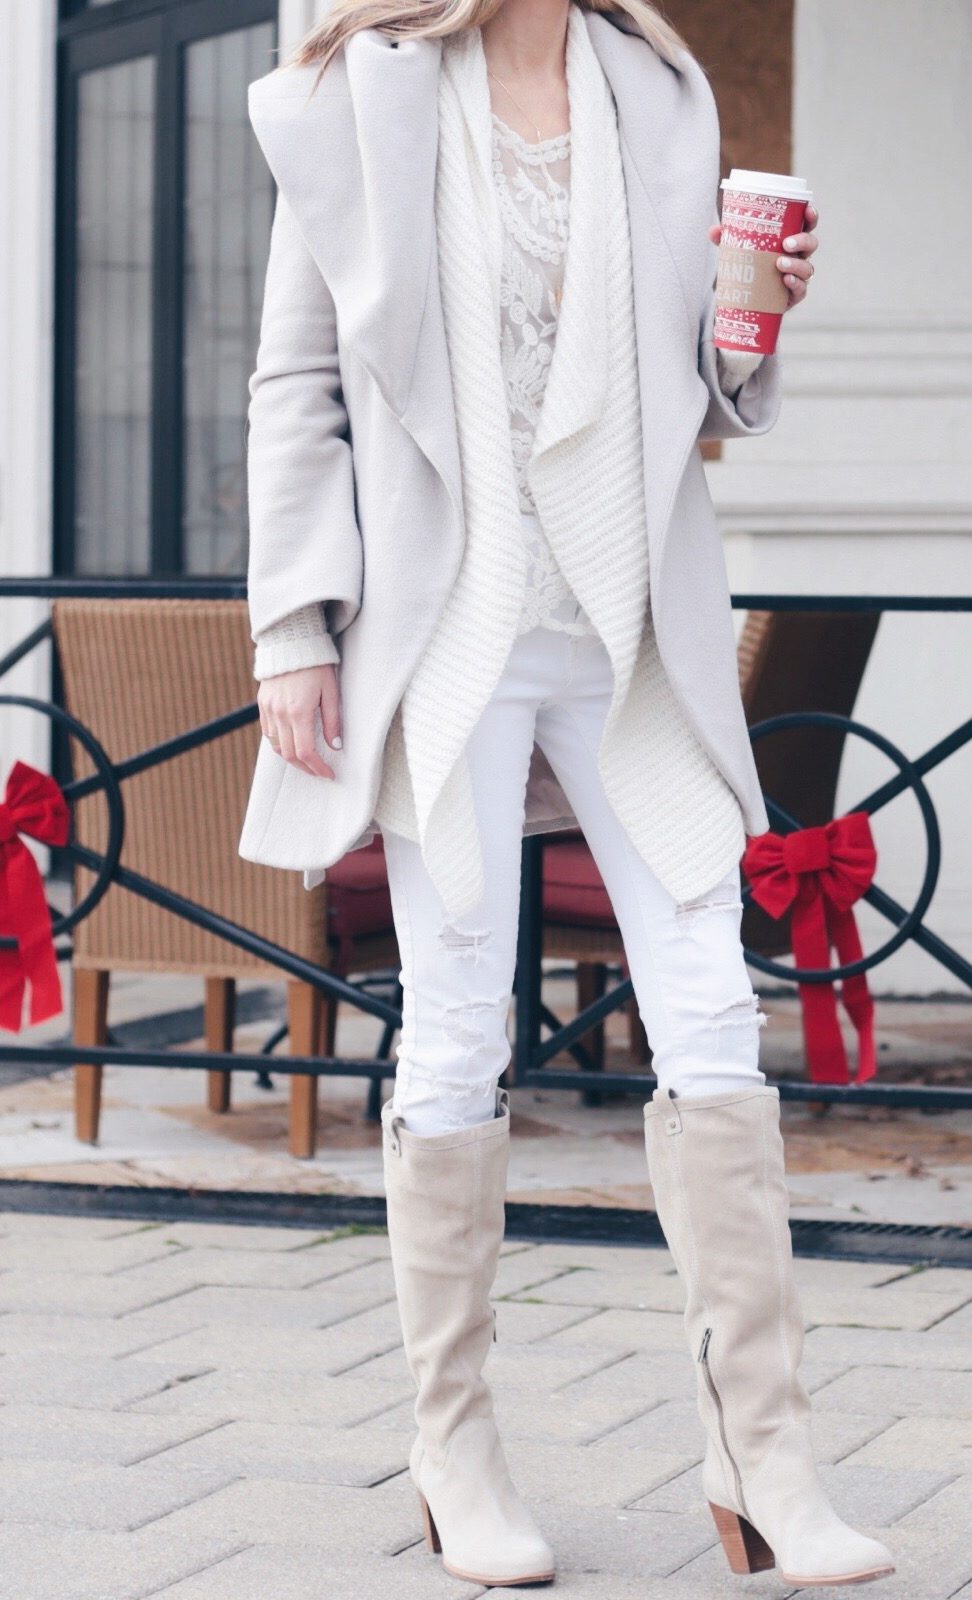 white winter clothes